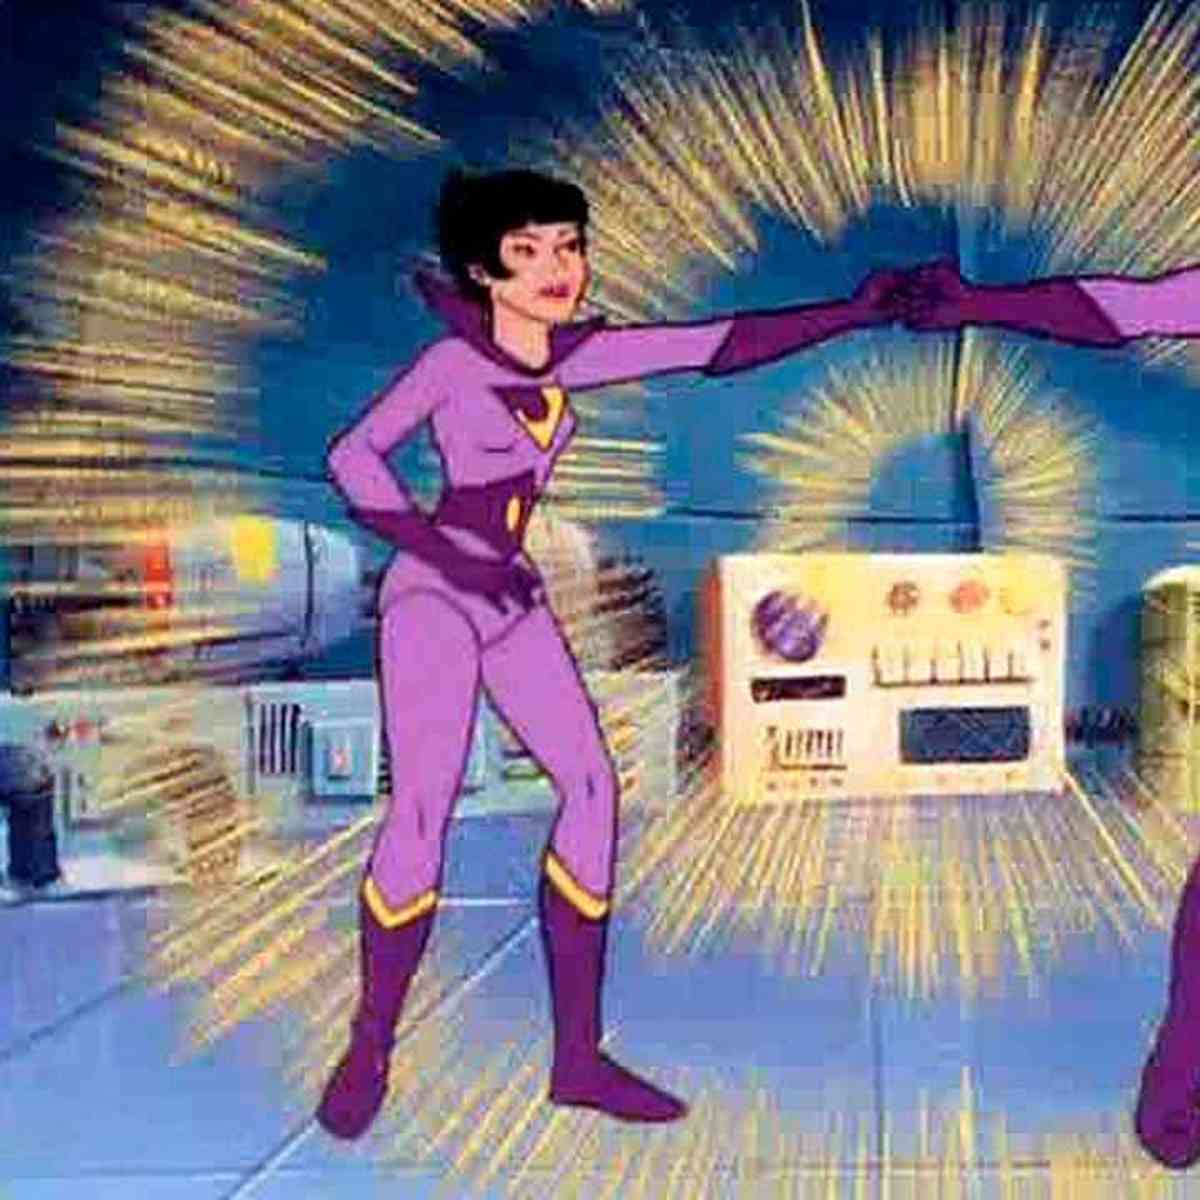 Warner deve produzir filmes com personagens da Hanna-Barbera